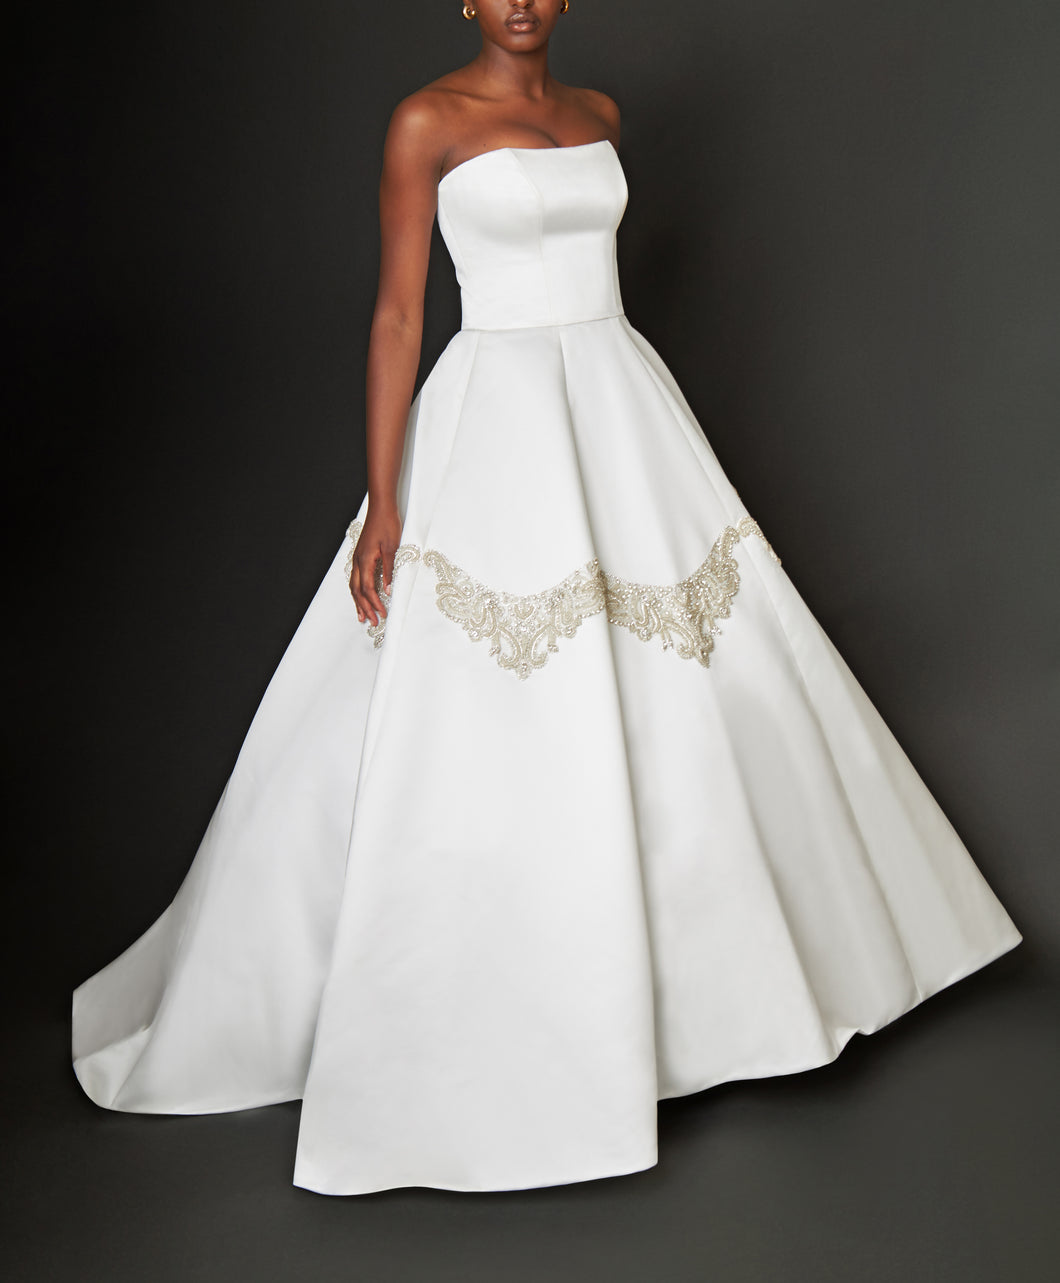 Crown of The Skirt - Bridal Design